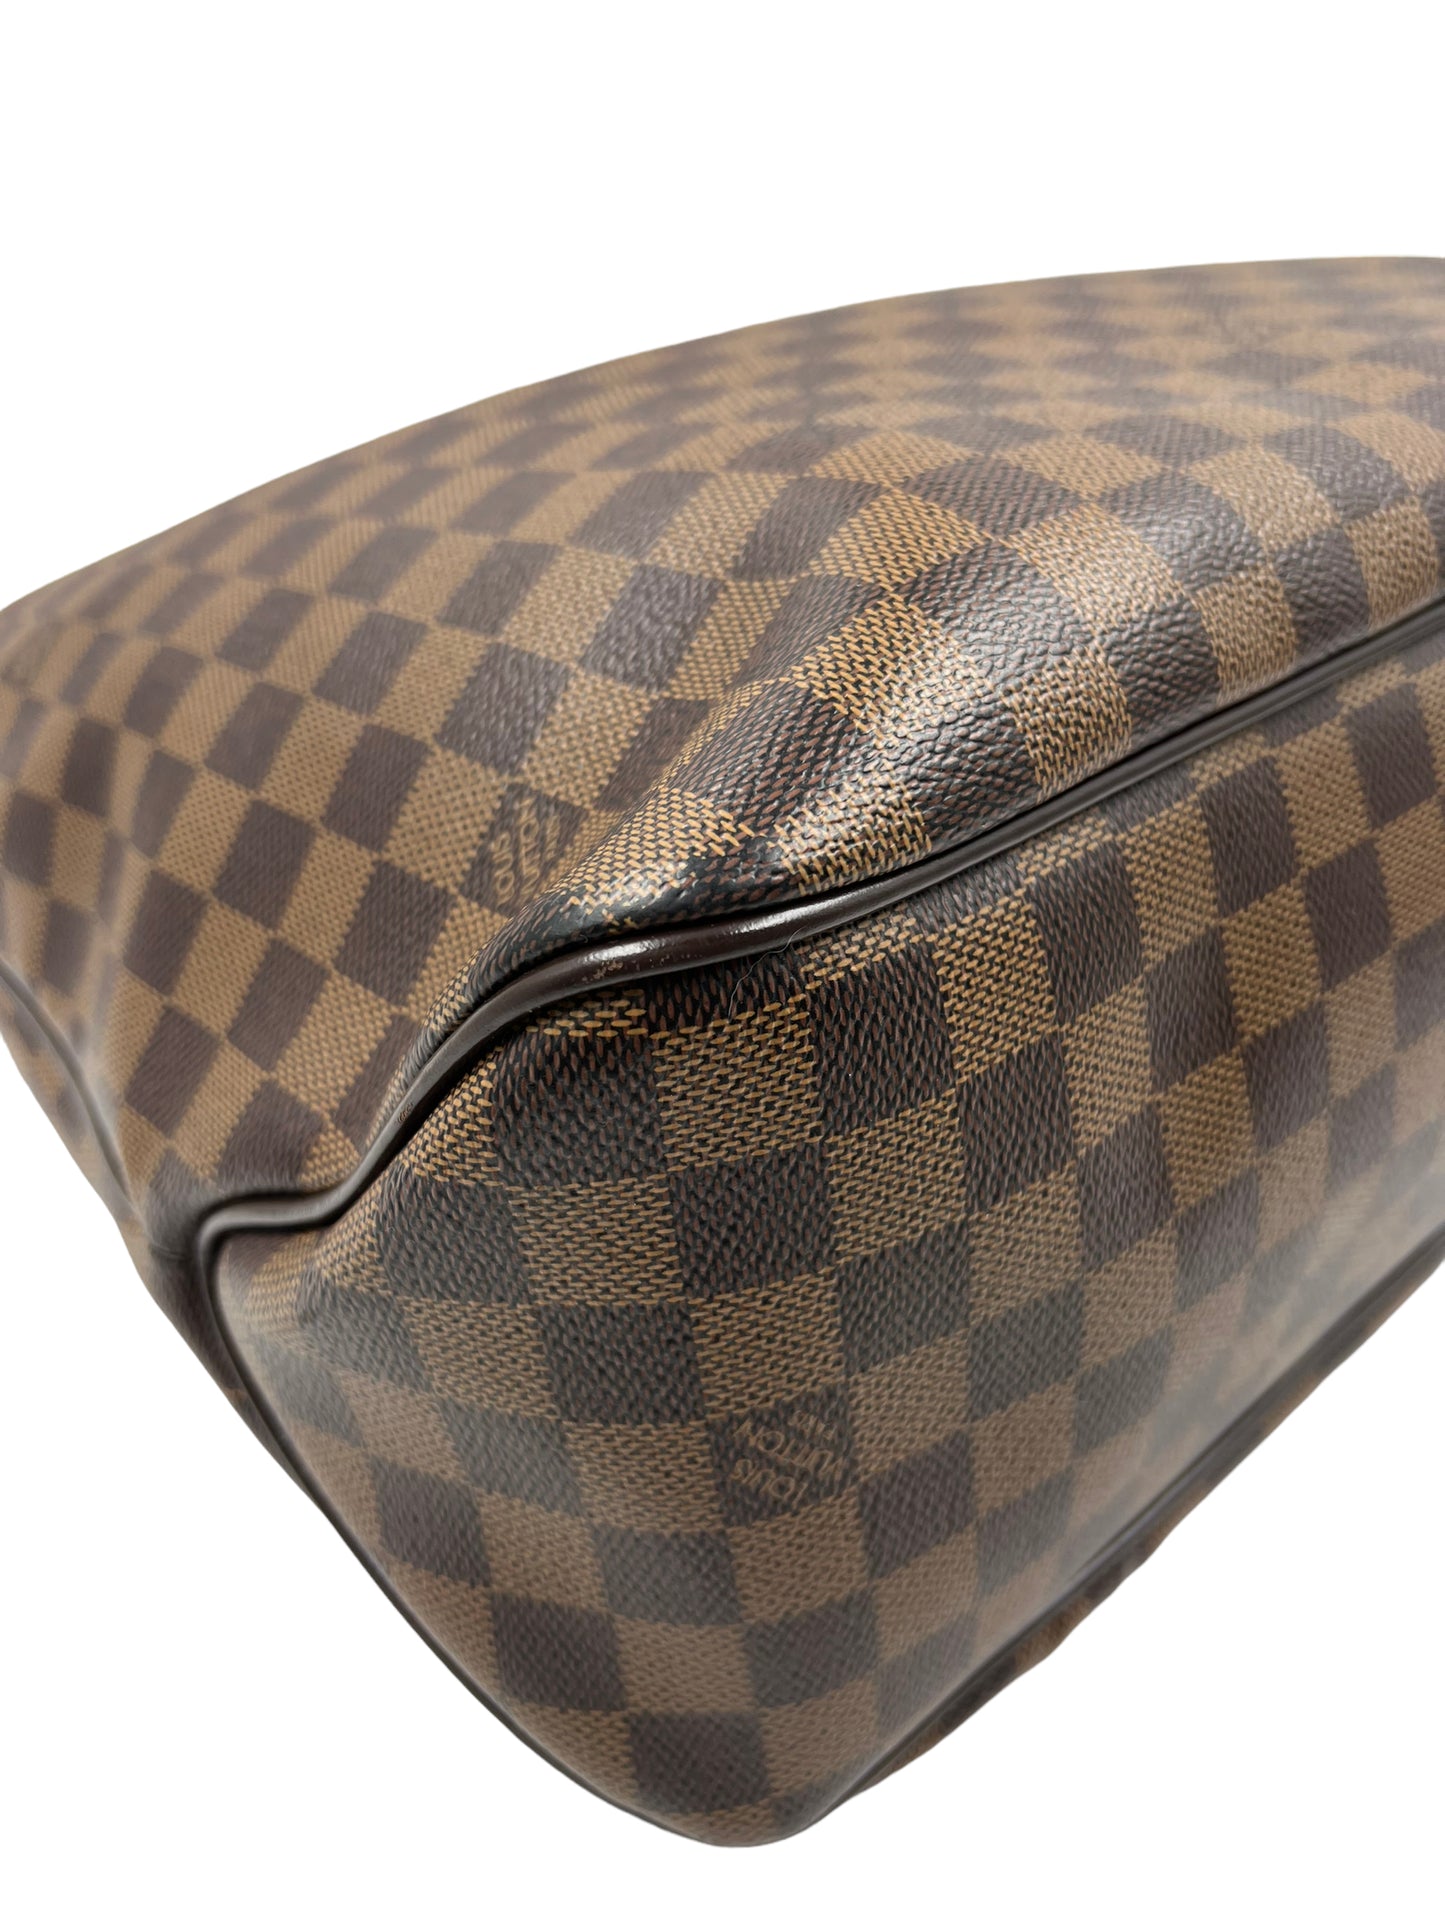 Louis Vuitton Damier Ebene Delightful PM Bag